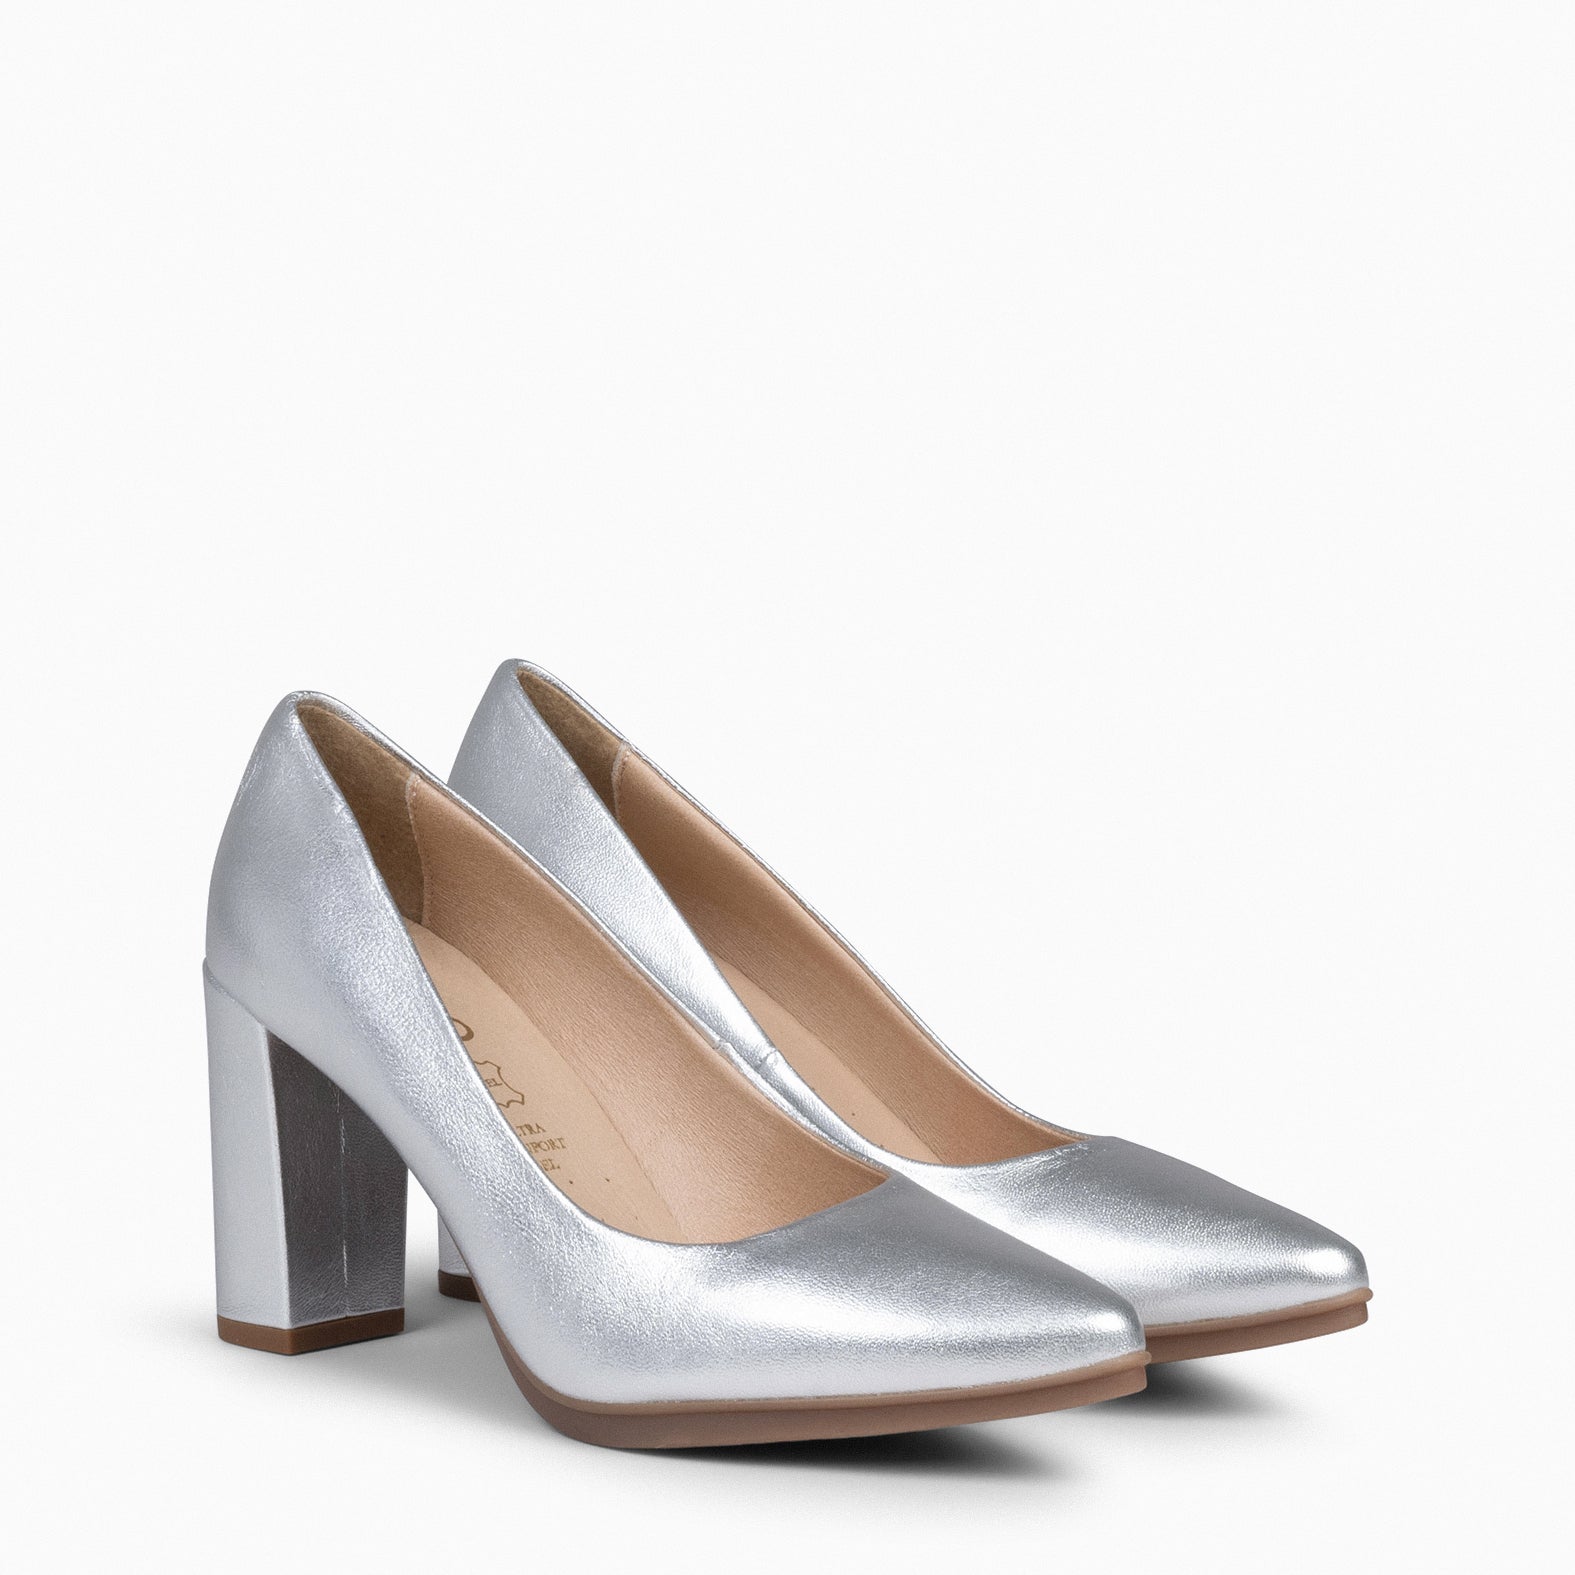 URBAN SPLASH – SILVER metallic leather heels